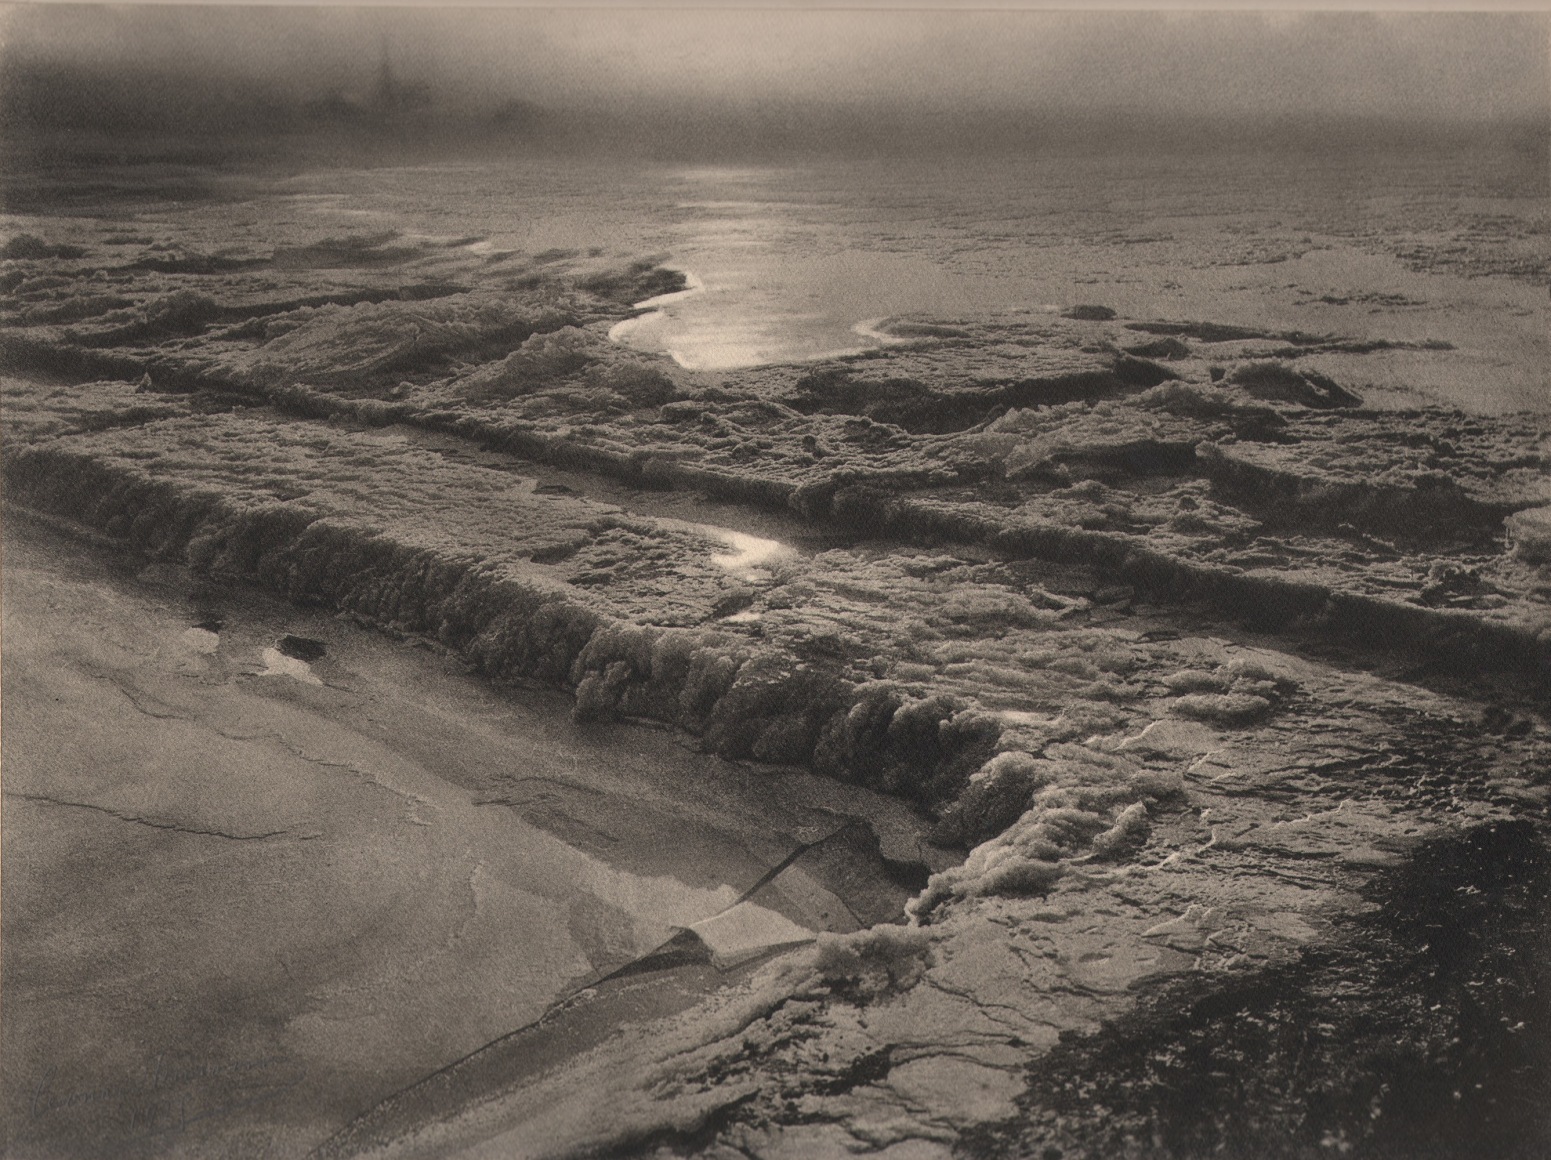 11. L&eacute;onard Misonne, Le barrage gel&egrave;, c. 1935. Frozen body of water in early morning, hazy light. Sepia-toned print.